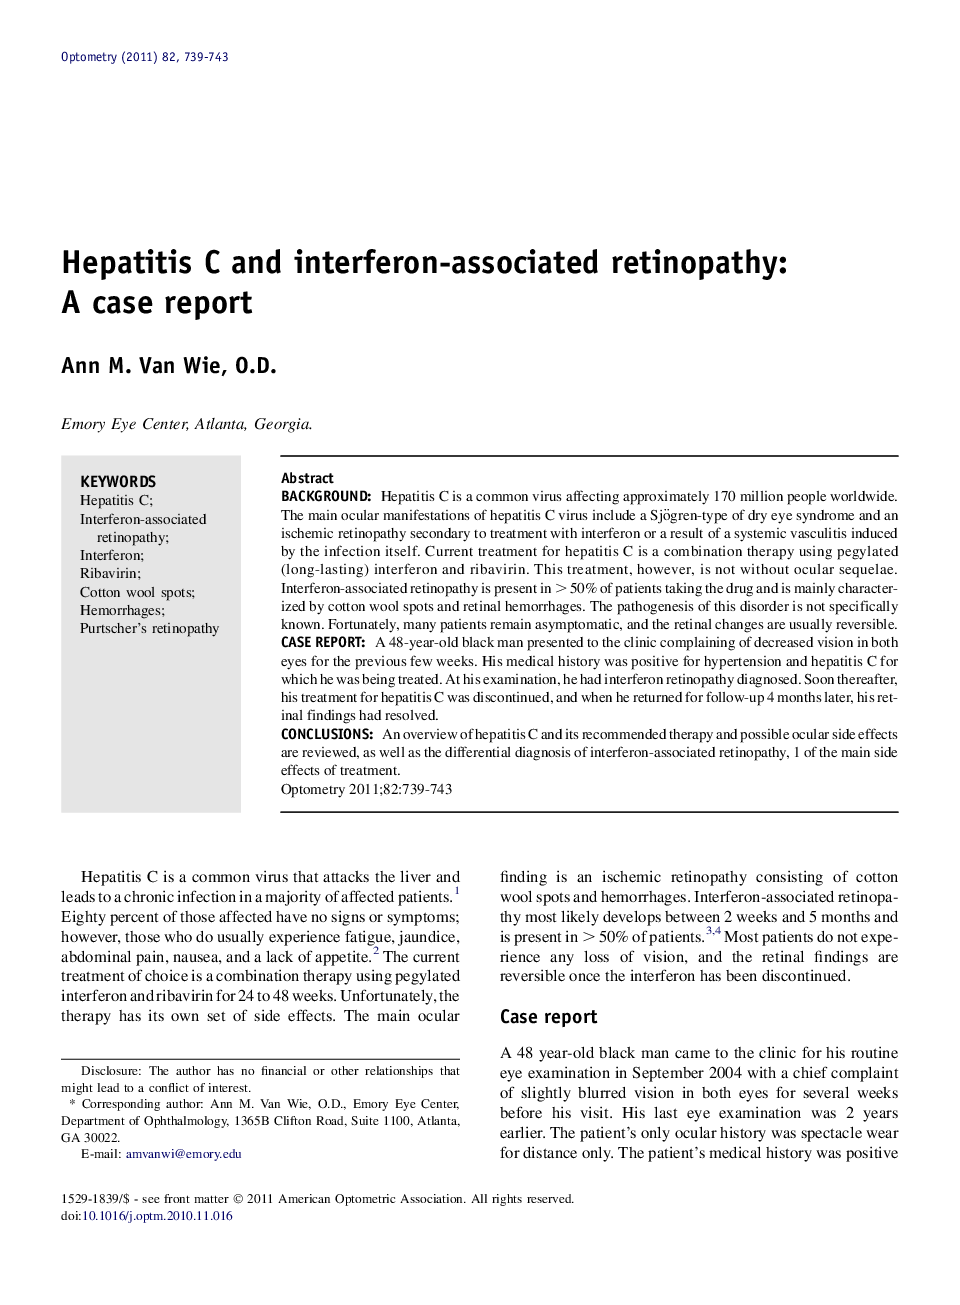 Hepatitis C and interferon-associated retinopathy: A case report 